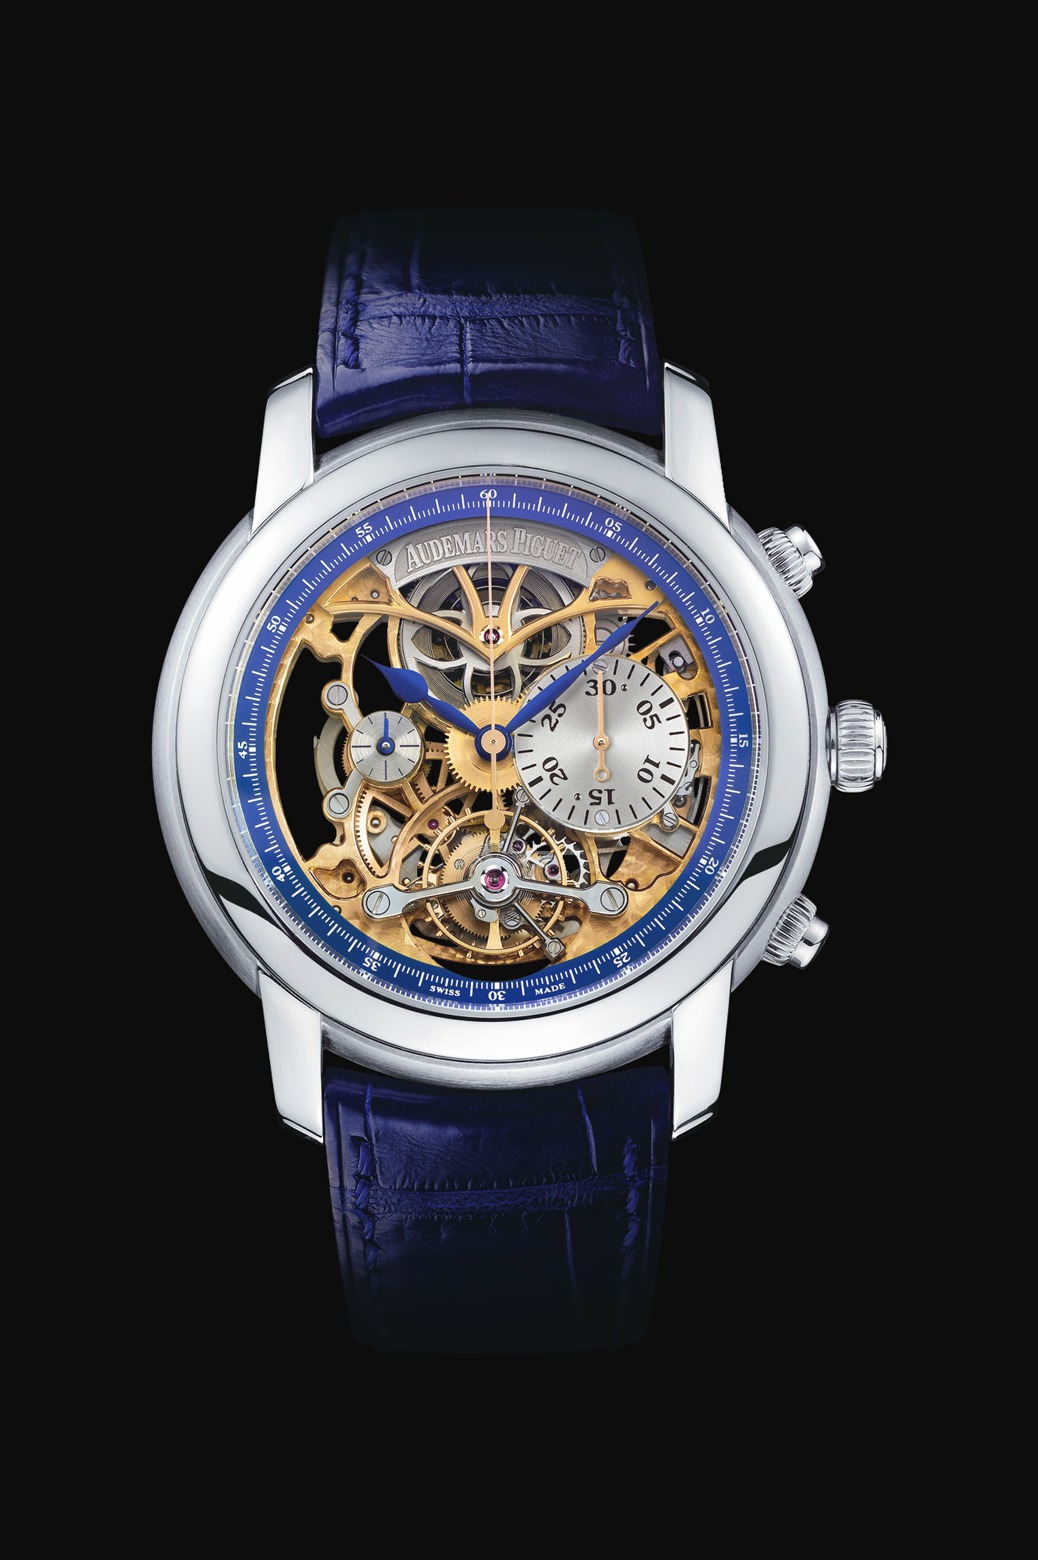 Audemars Piguet Jules Audemars Chronograph Tourbillon Platinum watch REF: 26353PT.OO.D028CR.01 - Click Image to Close